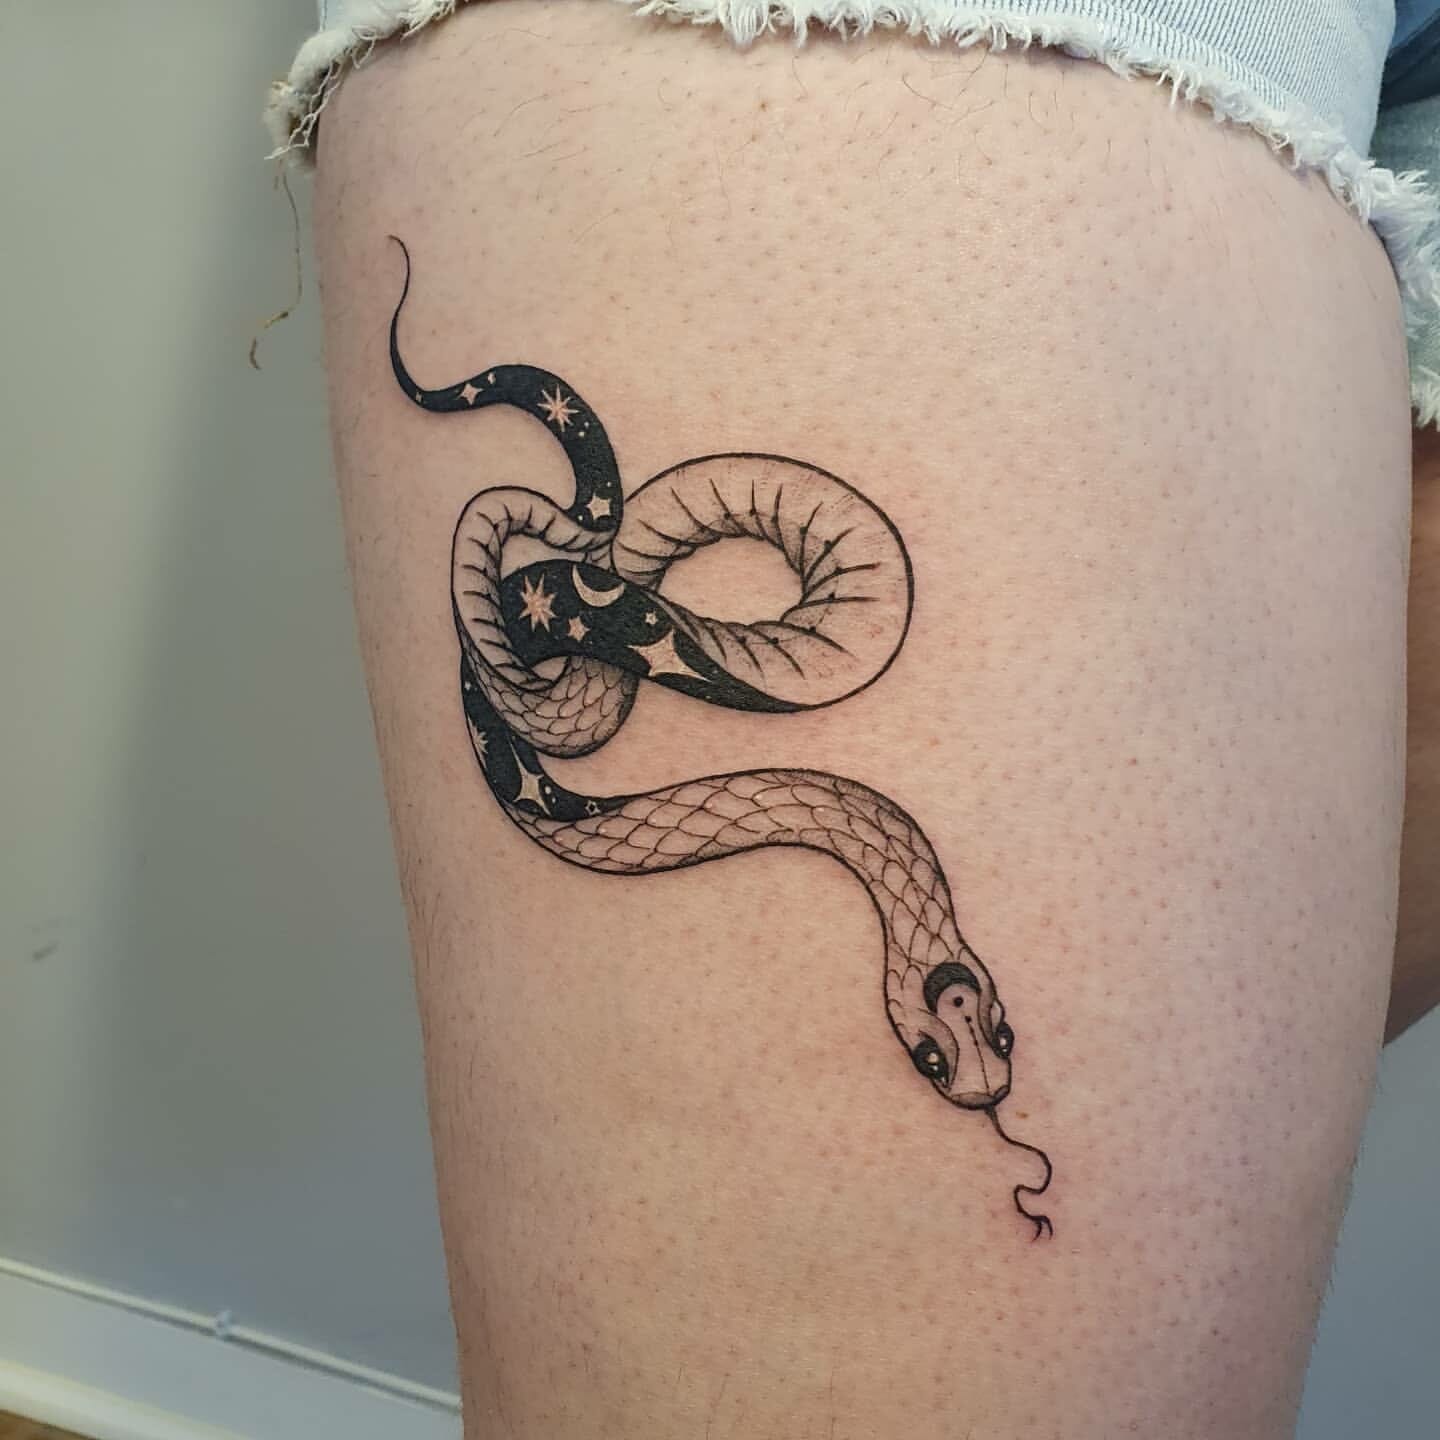 Small Snake Tattoo